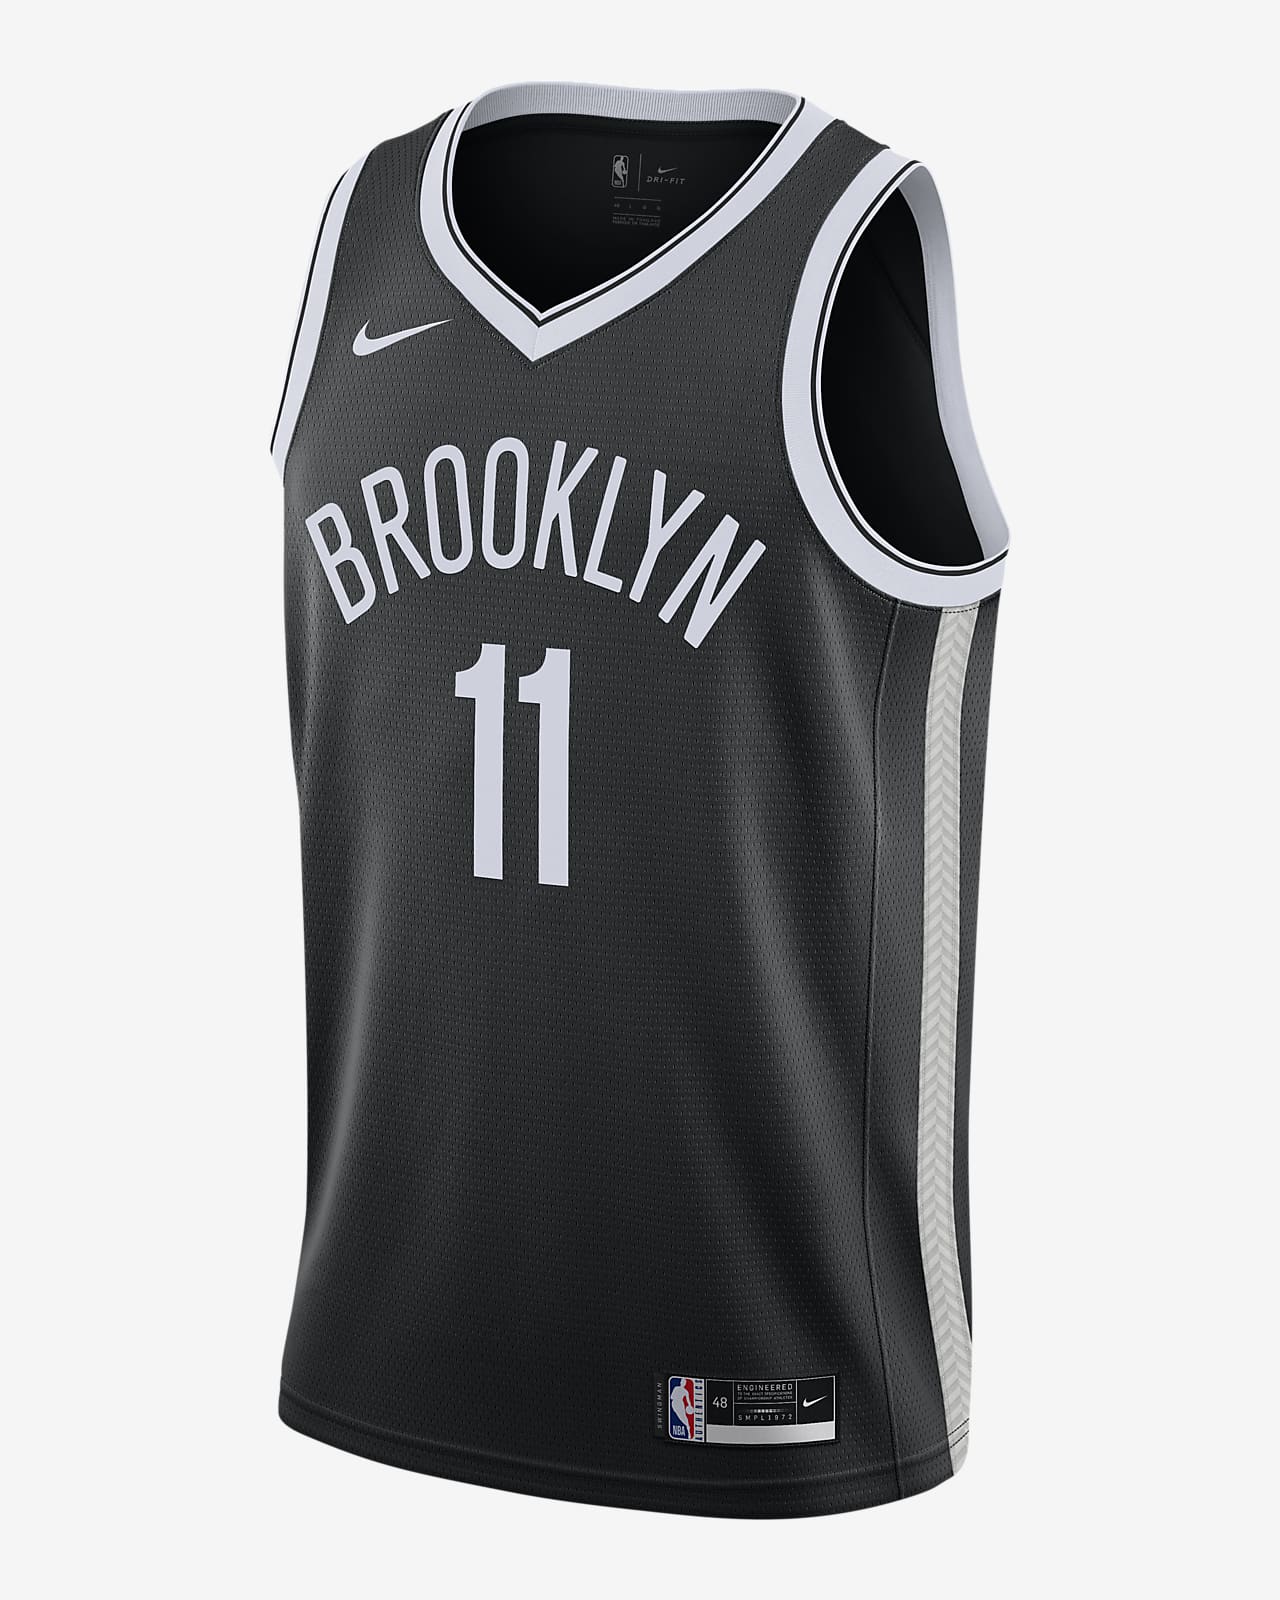 2020 赛季布鲁克林篮网队 (Kyrie Irving) Icon Edition Nike NBA Swingman Jersey 男子球衣